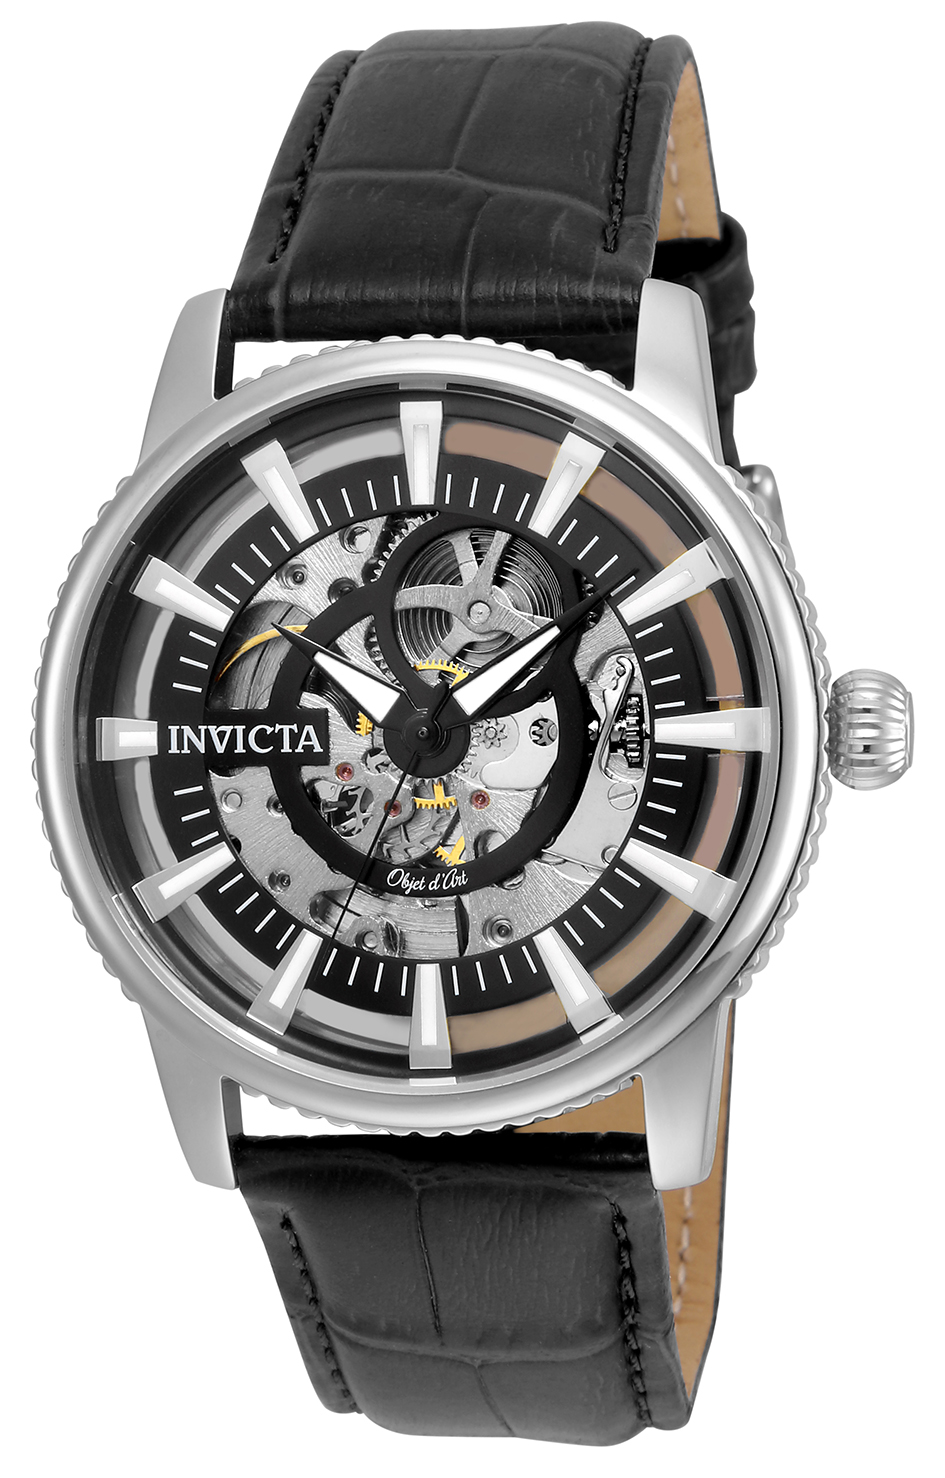 Invicta Objet D Art Automatic Men's Watch - 42mm, Black (22641)